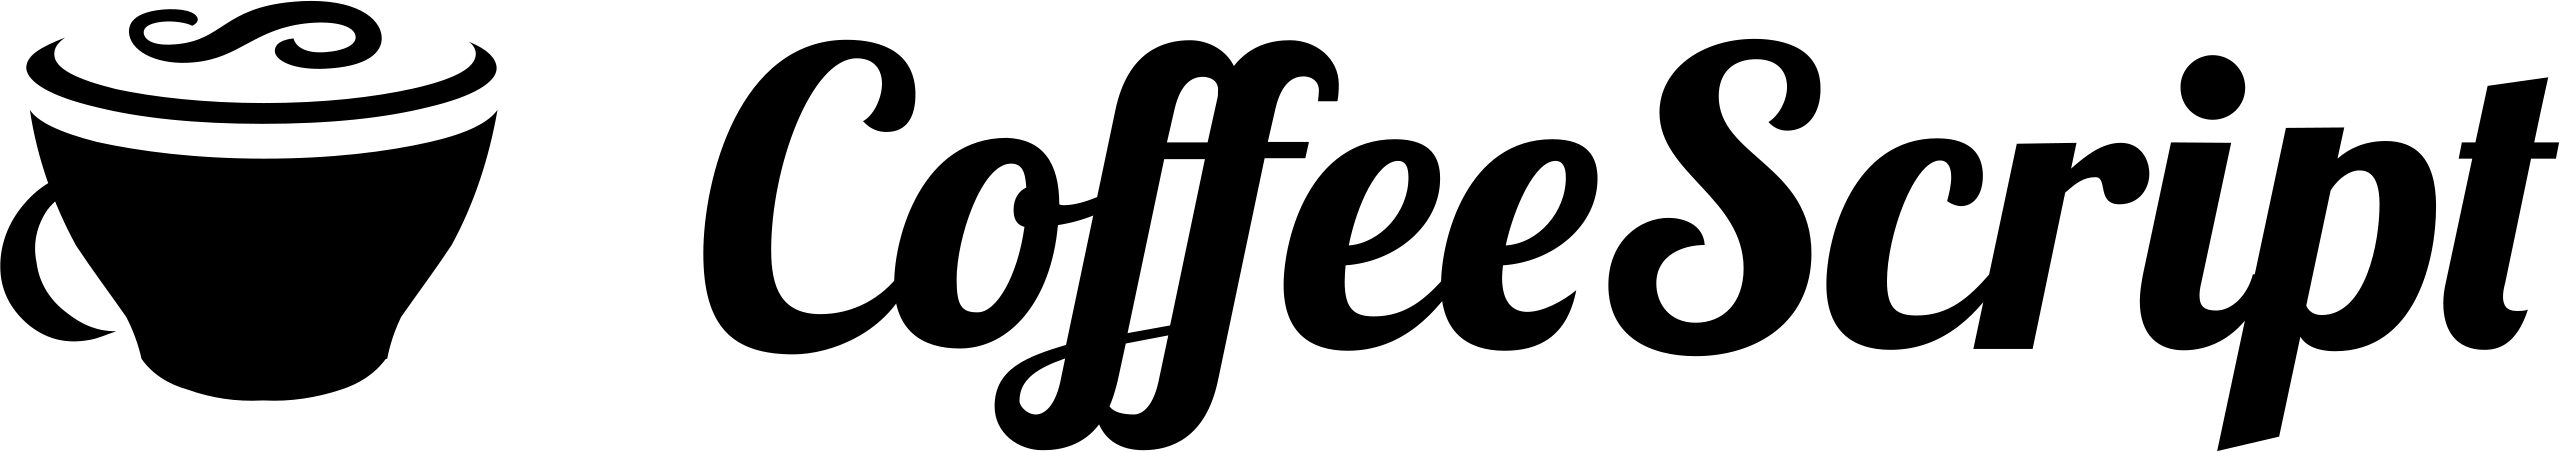 Coffeescript. COFFEESCRIPT синтаксис. Script logo. Скрипт лого. COFFEESCRIPT logo.